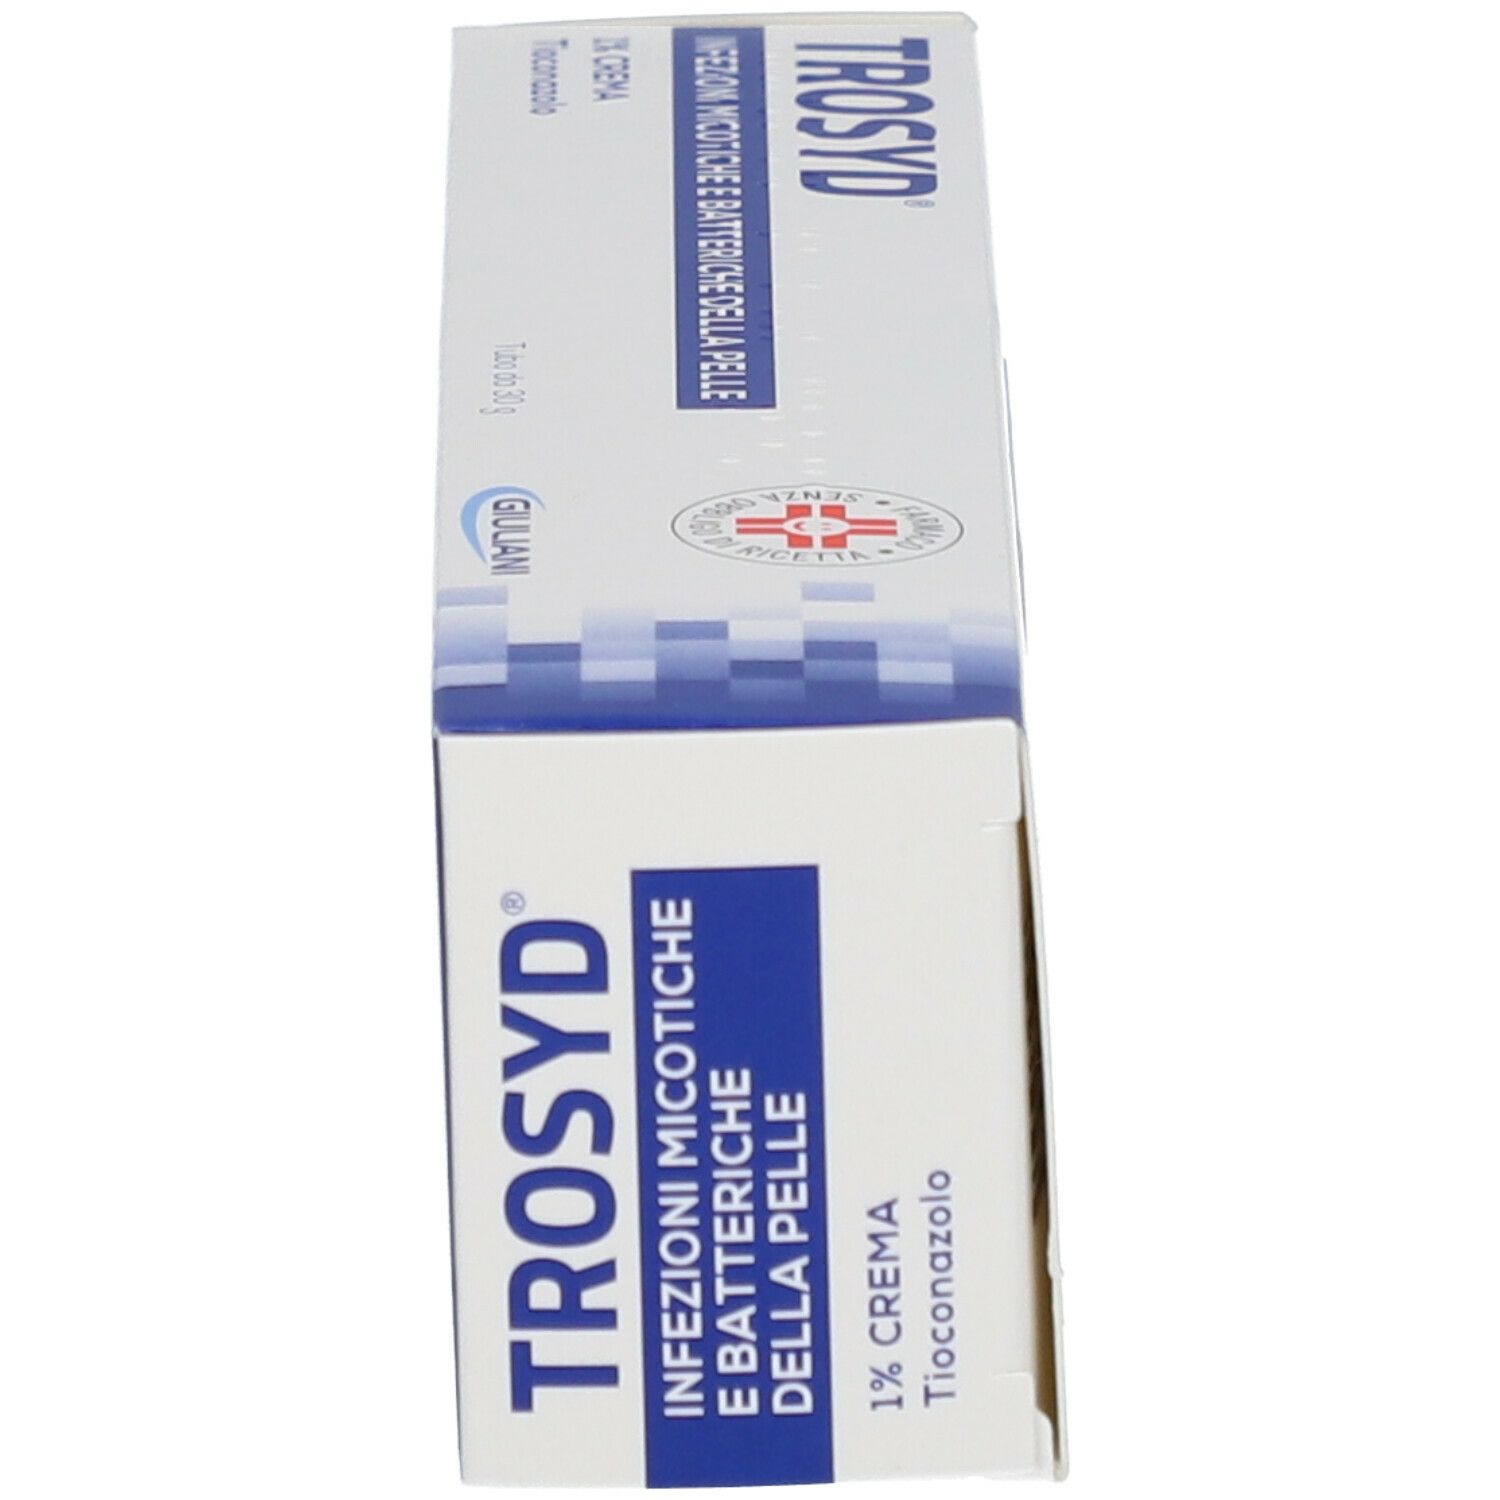 Trosyd® 1% Crema Tioconazolo